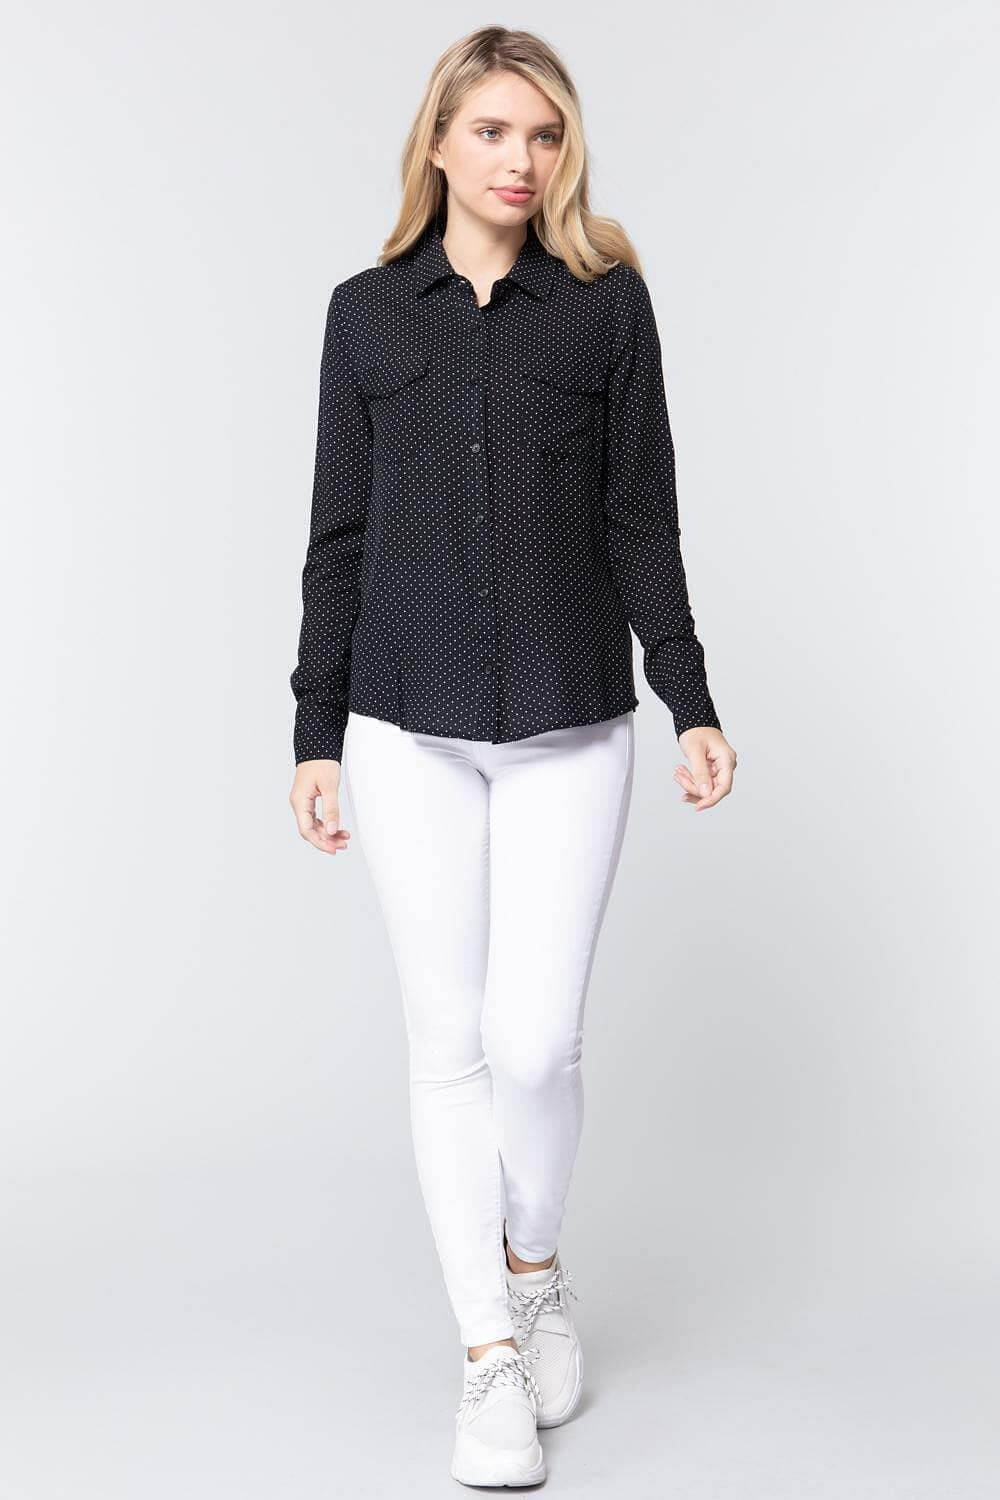 Black And White Polka Dot Long sleeve Shirt - Shopping Therapy, LLC Shirts & Tops